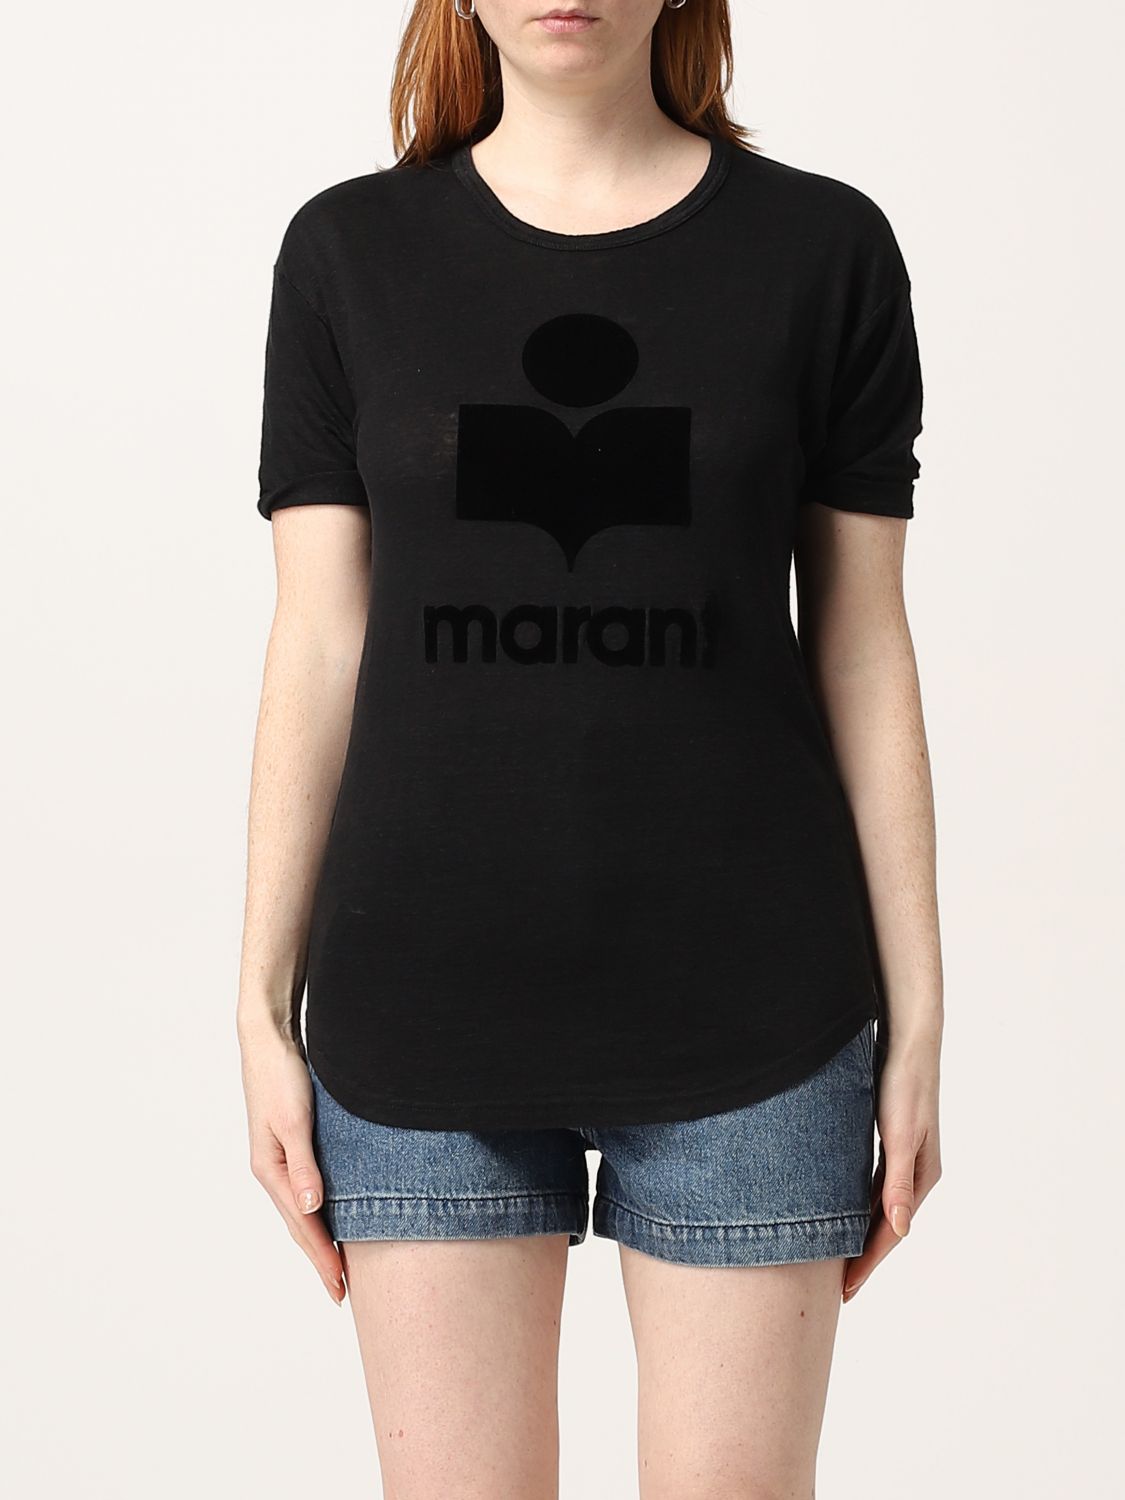 ISABEL MARANT ETOILE: linen t-shirt - Black | Isabel Marant Etoile t ...